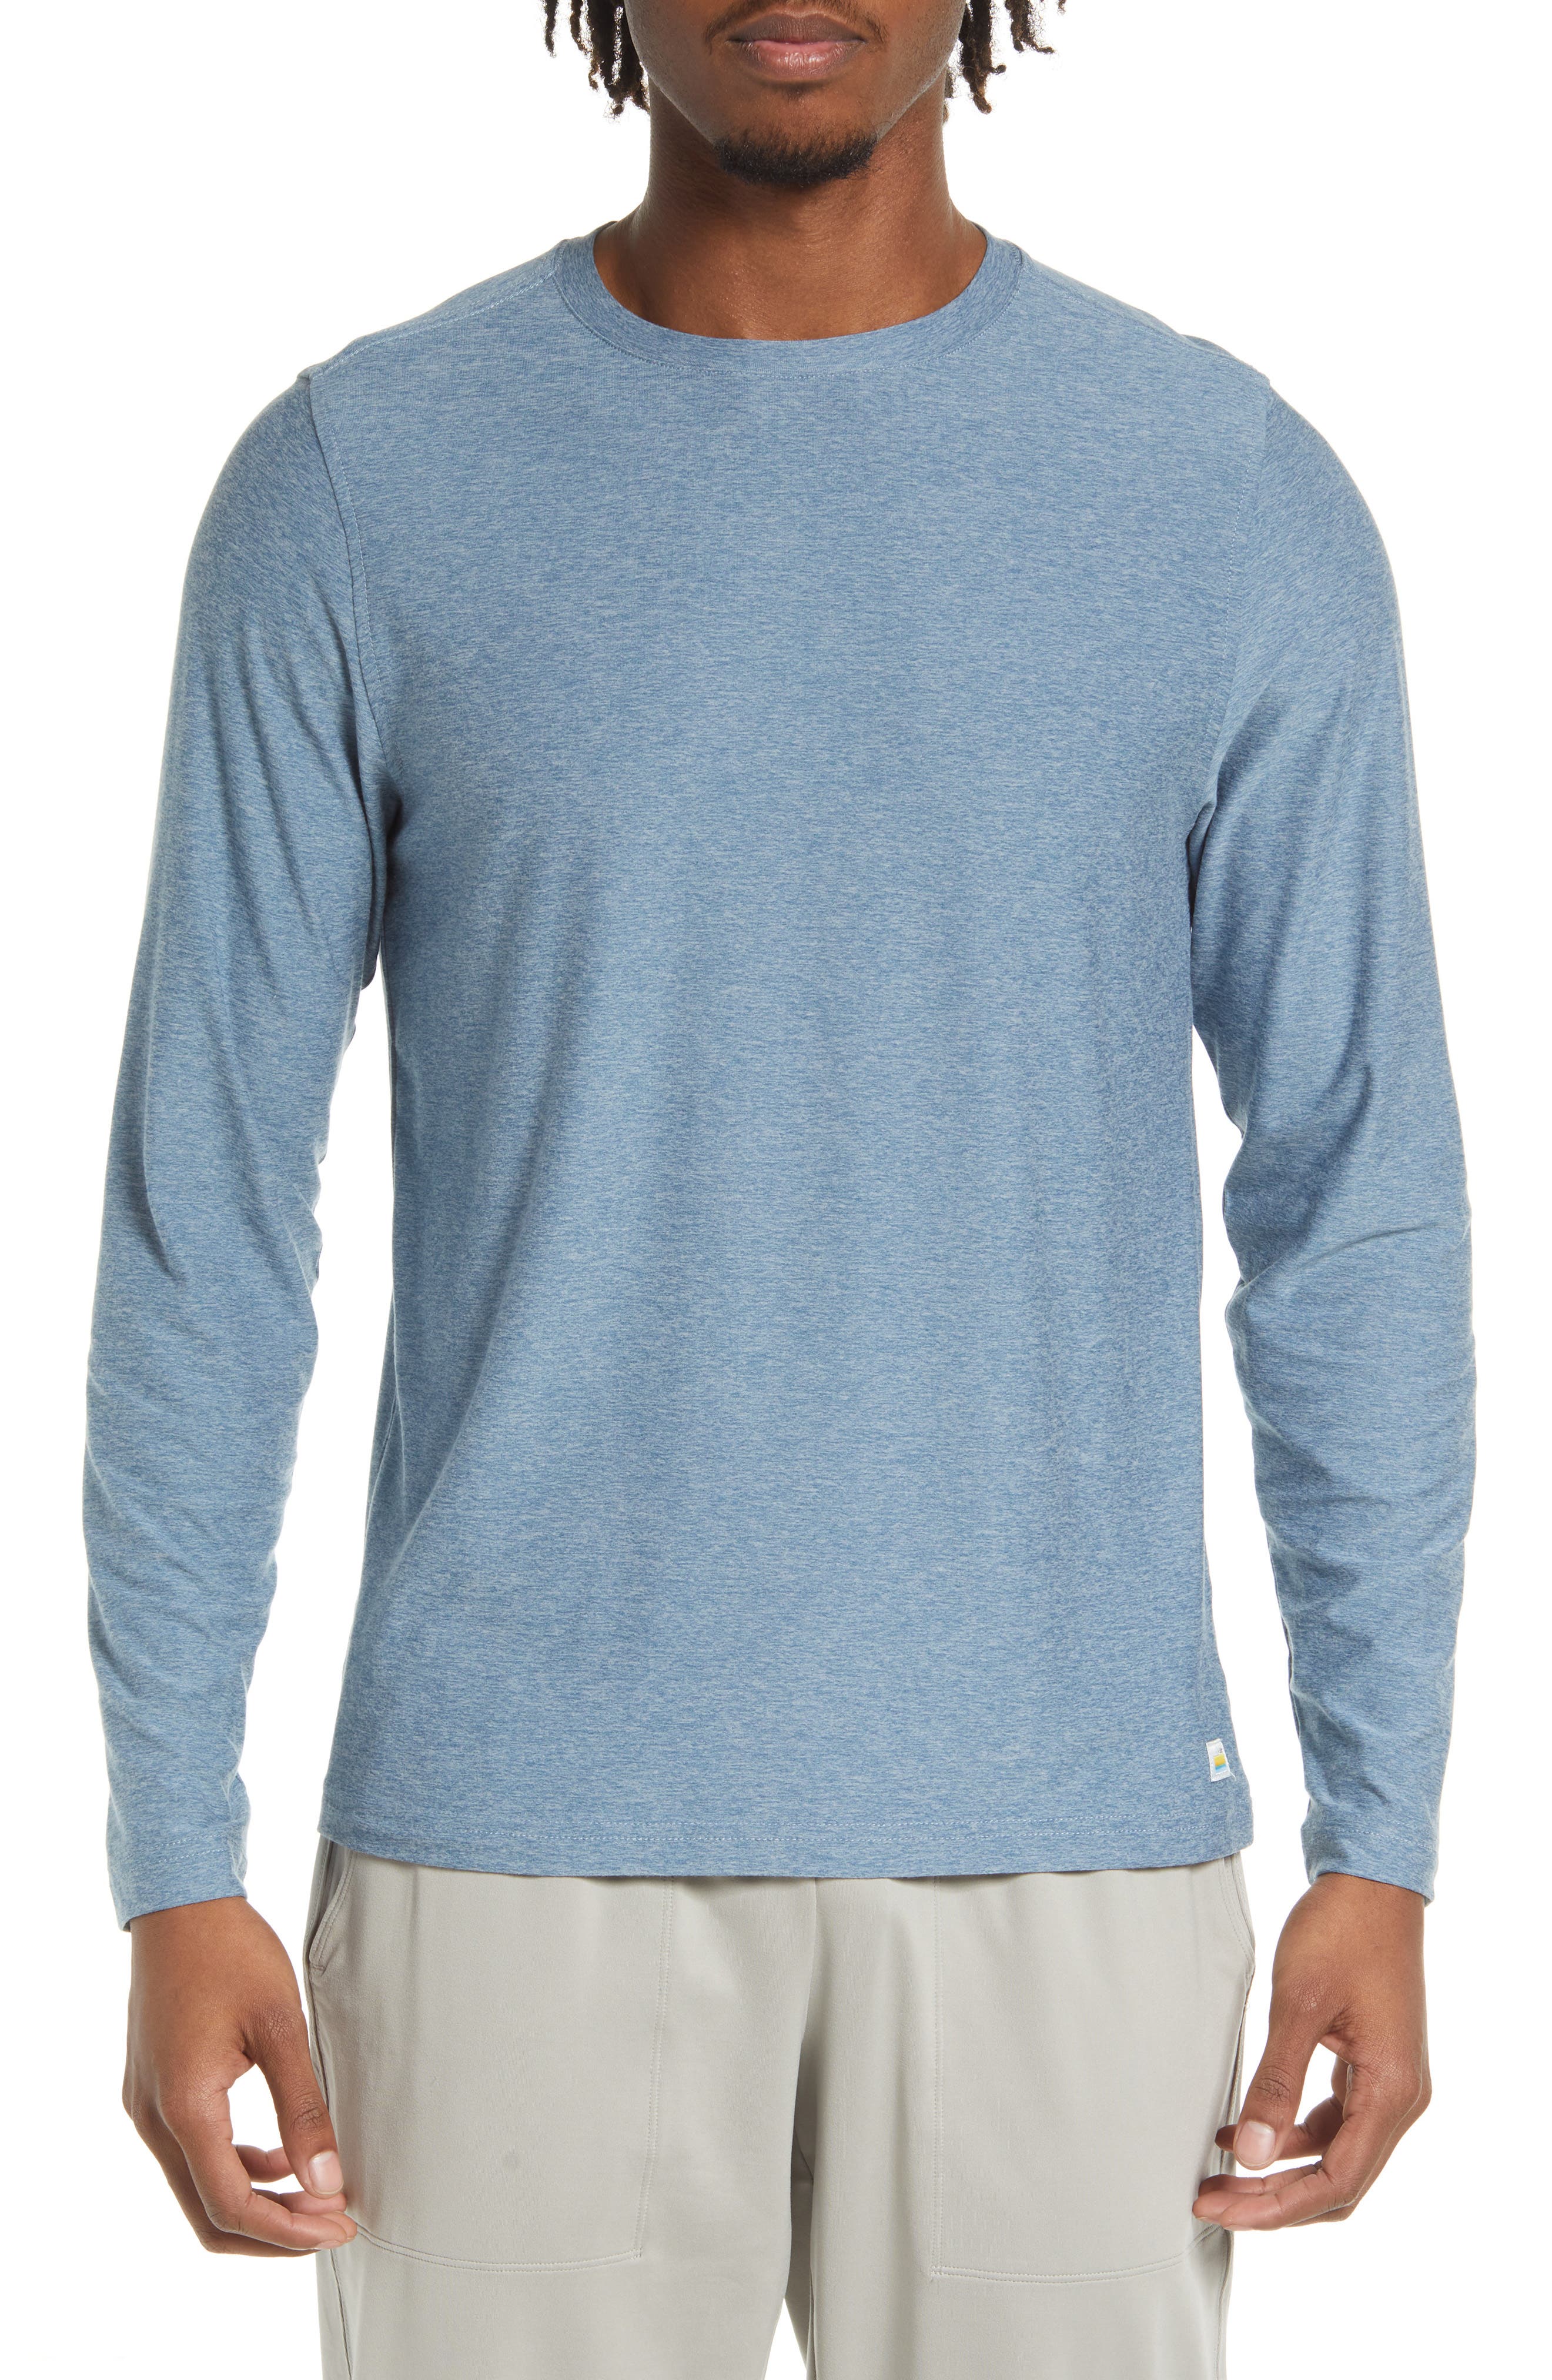 Mens Casual Waffle House Tee T Shirt Short Sleeve O-Neck Cotton T-Shirt Sports Tops Tshirt Pull-Over Hoodie Sweatshirt